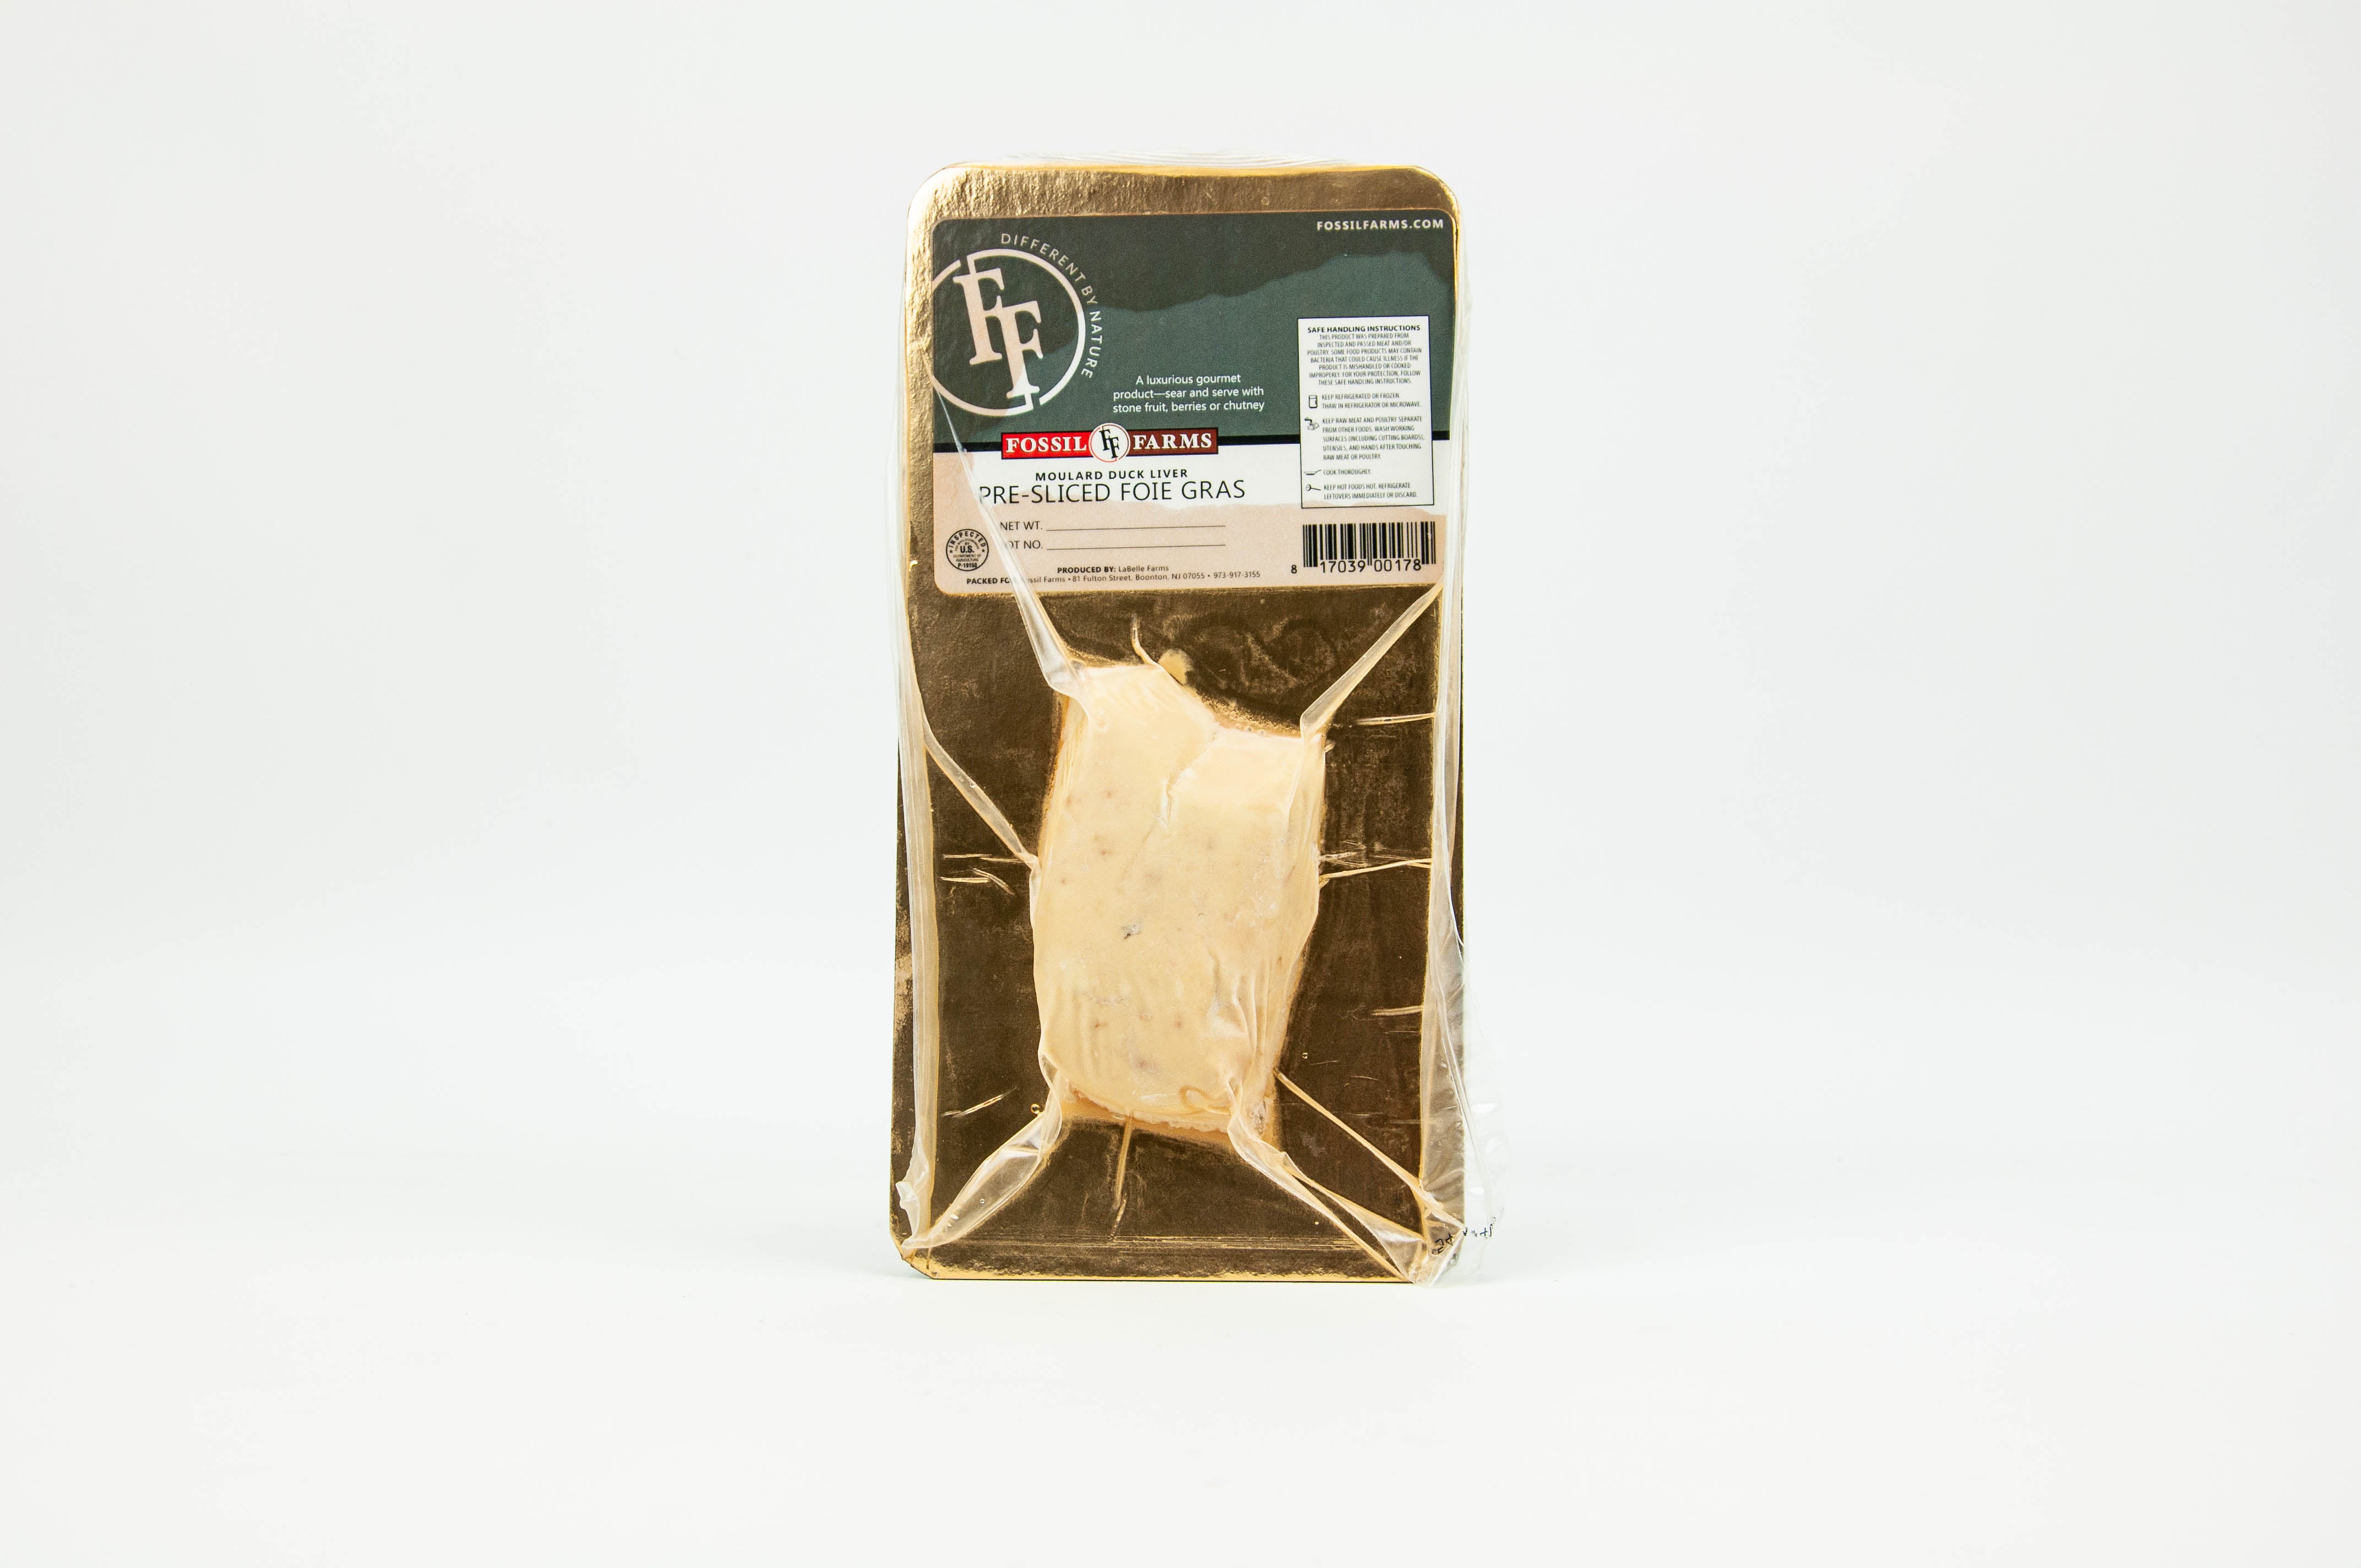 moulard duck foie gras packaged